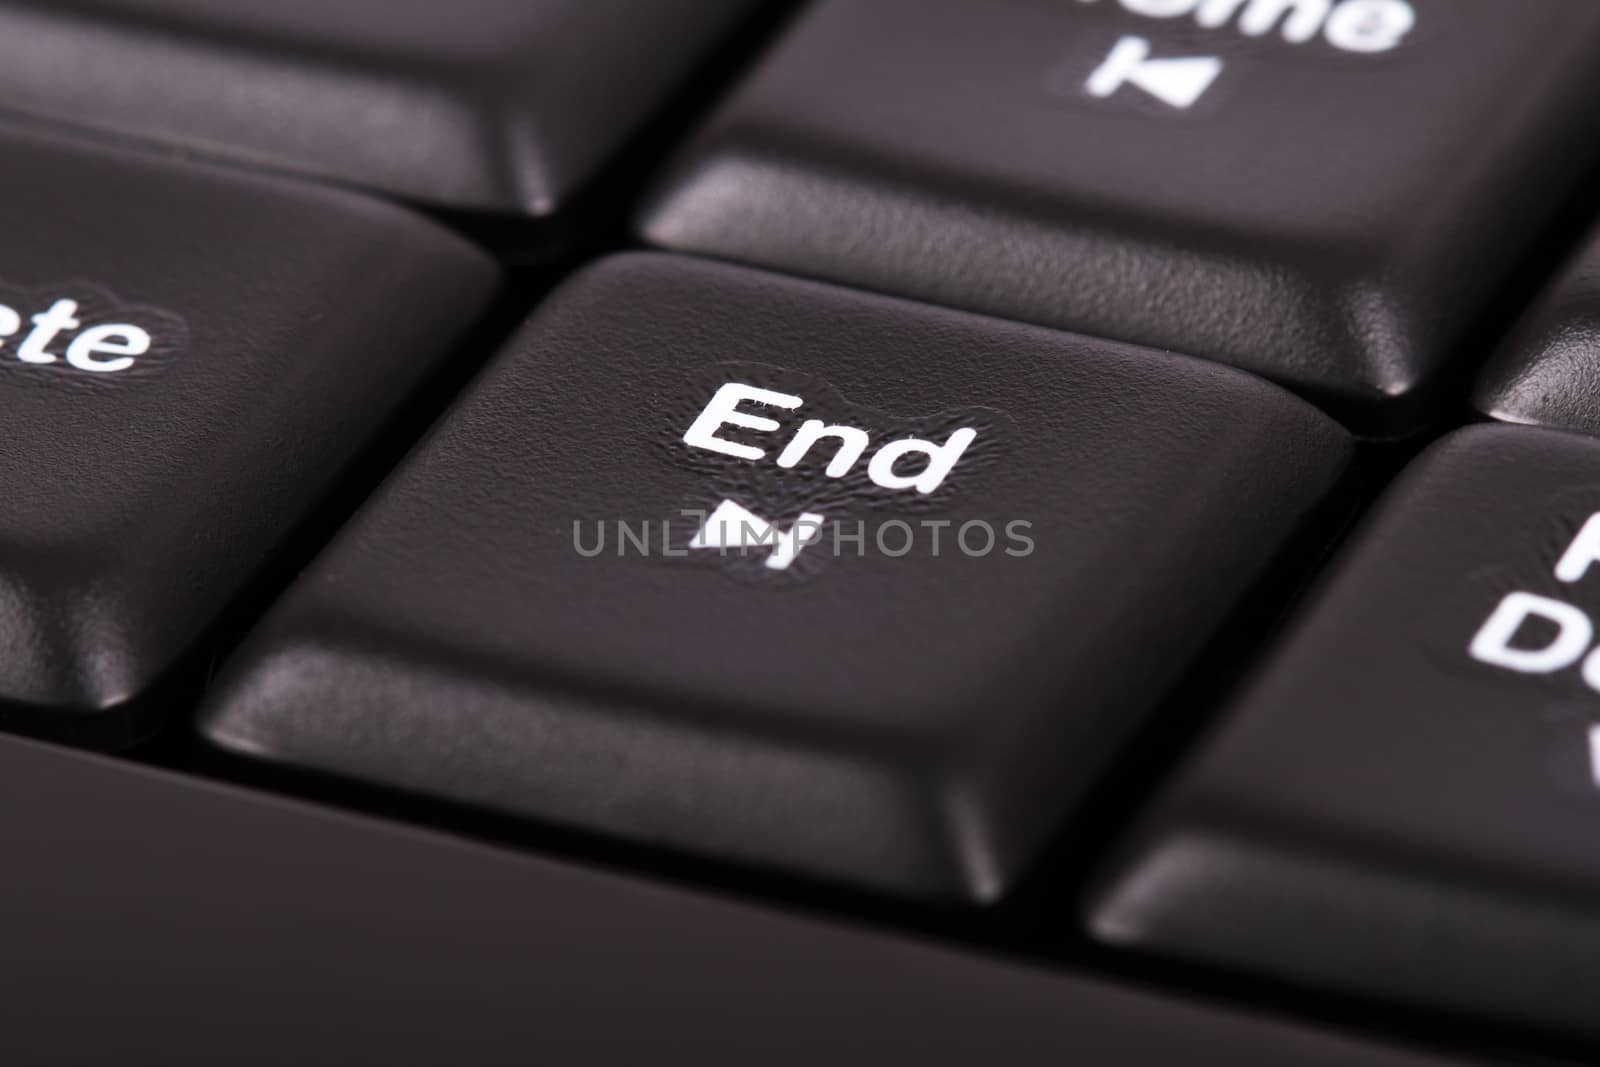 End key on computer keyboard.